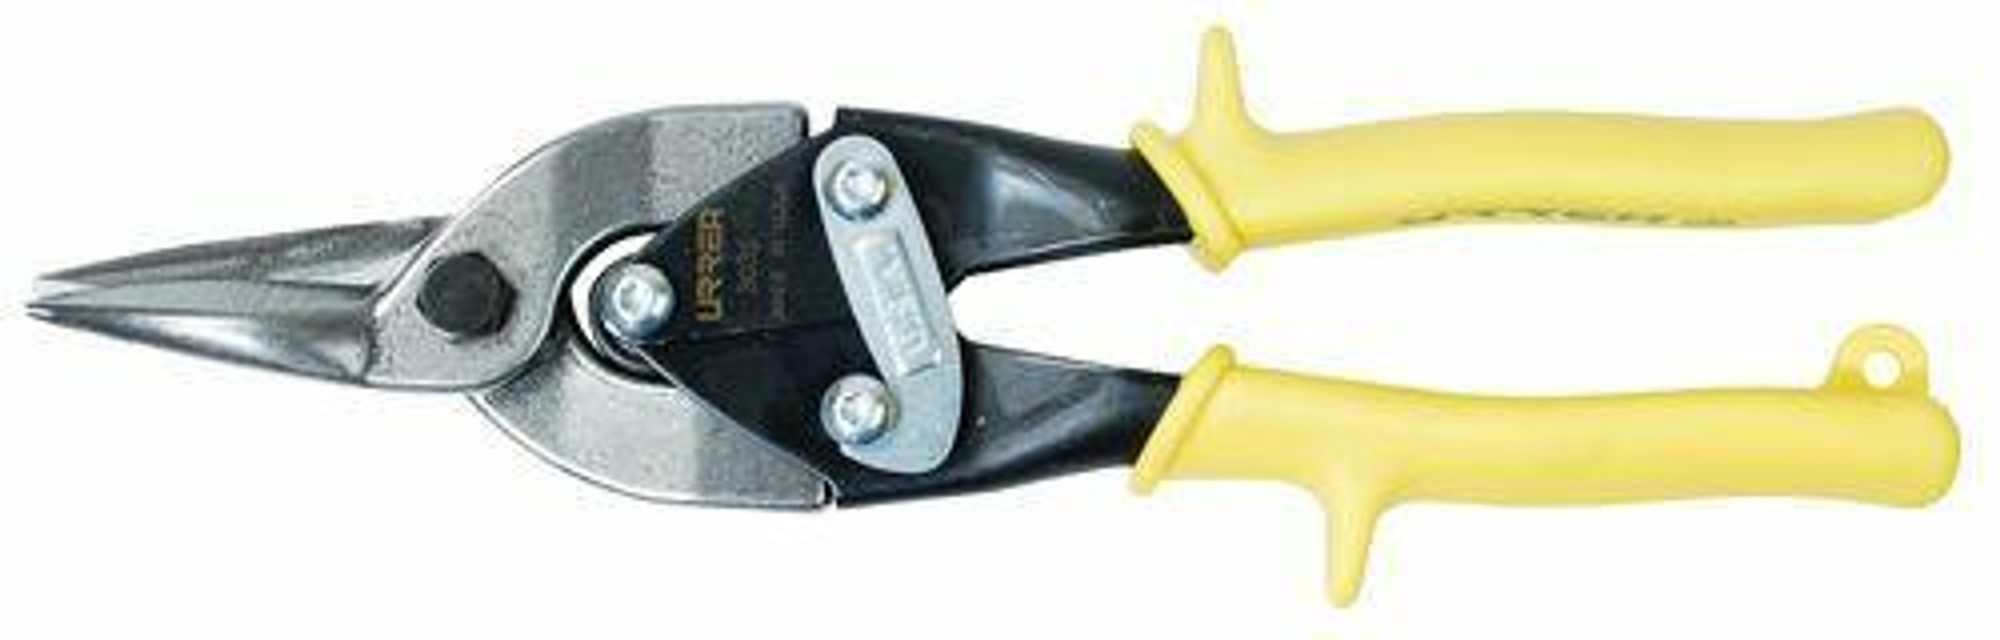 Aviation Snip - Straight Cut Tin Snips Cutting Metal Shears with